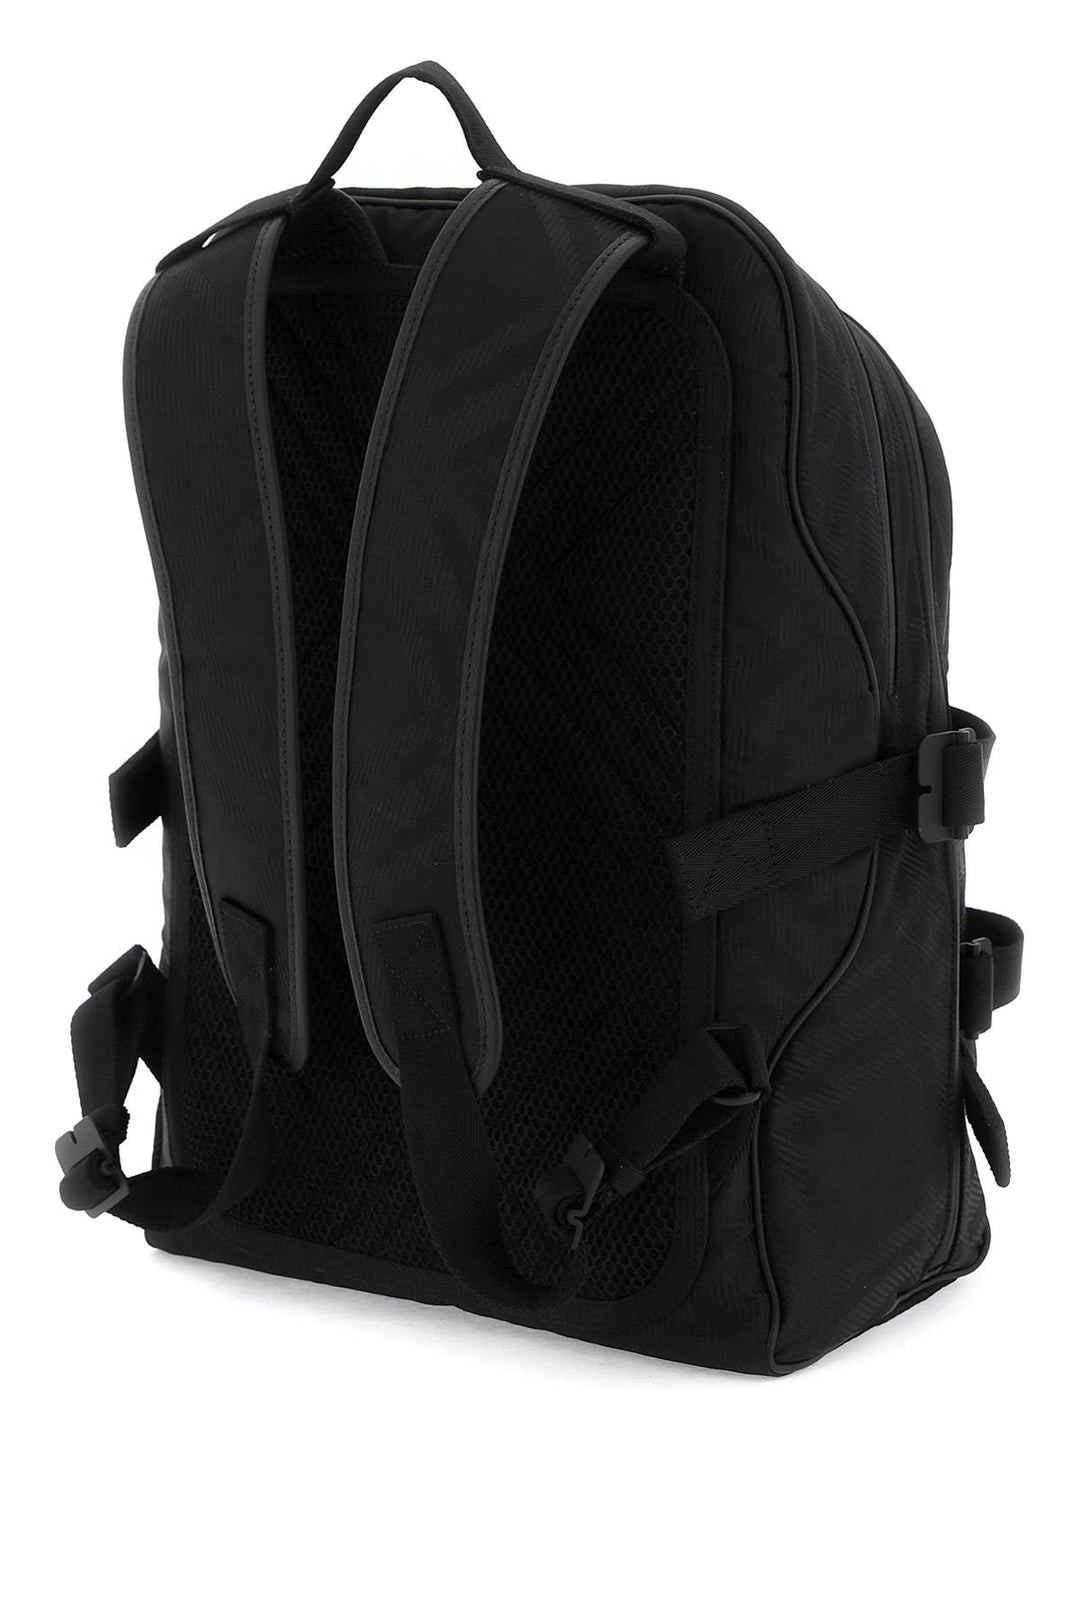 Burberry Ered Jacquard Backpack   Nero